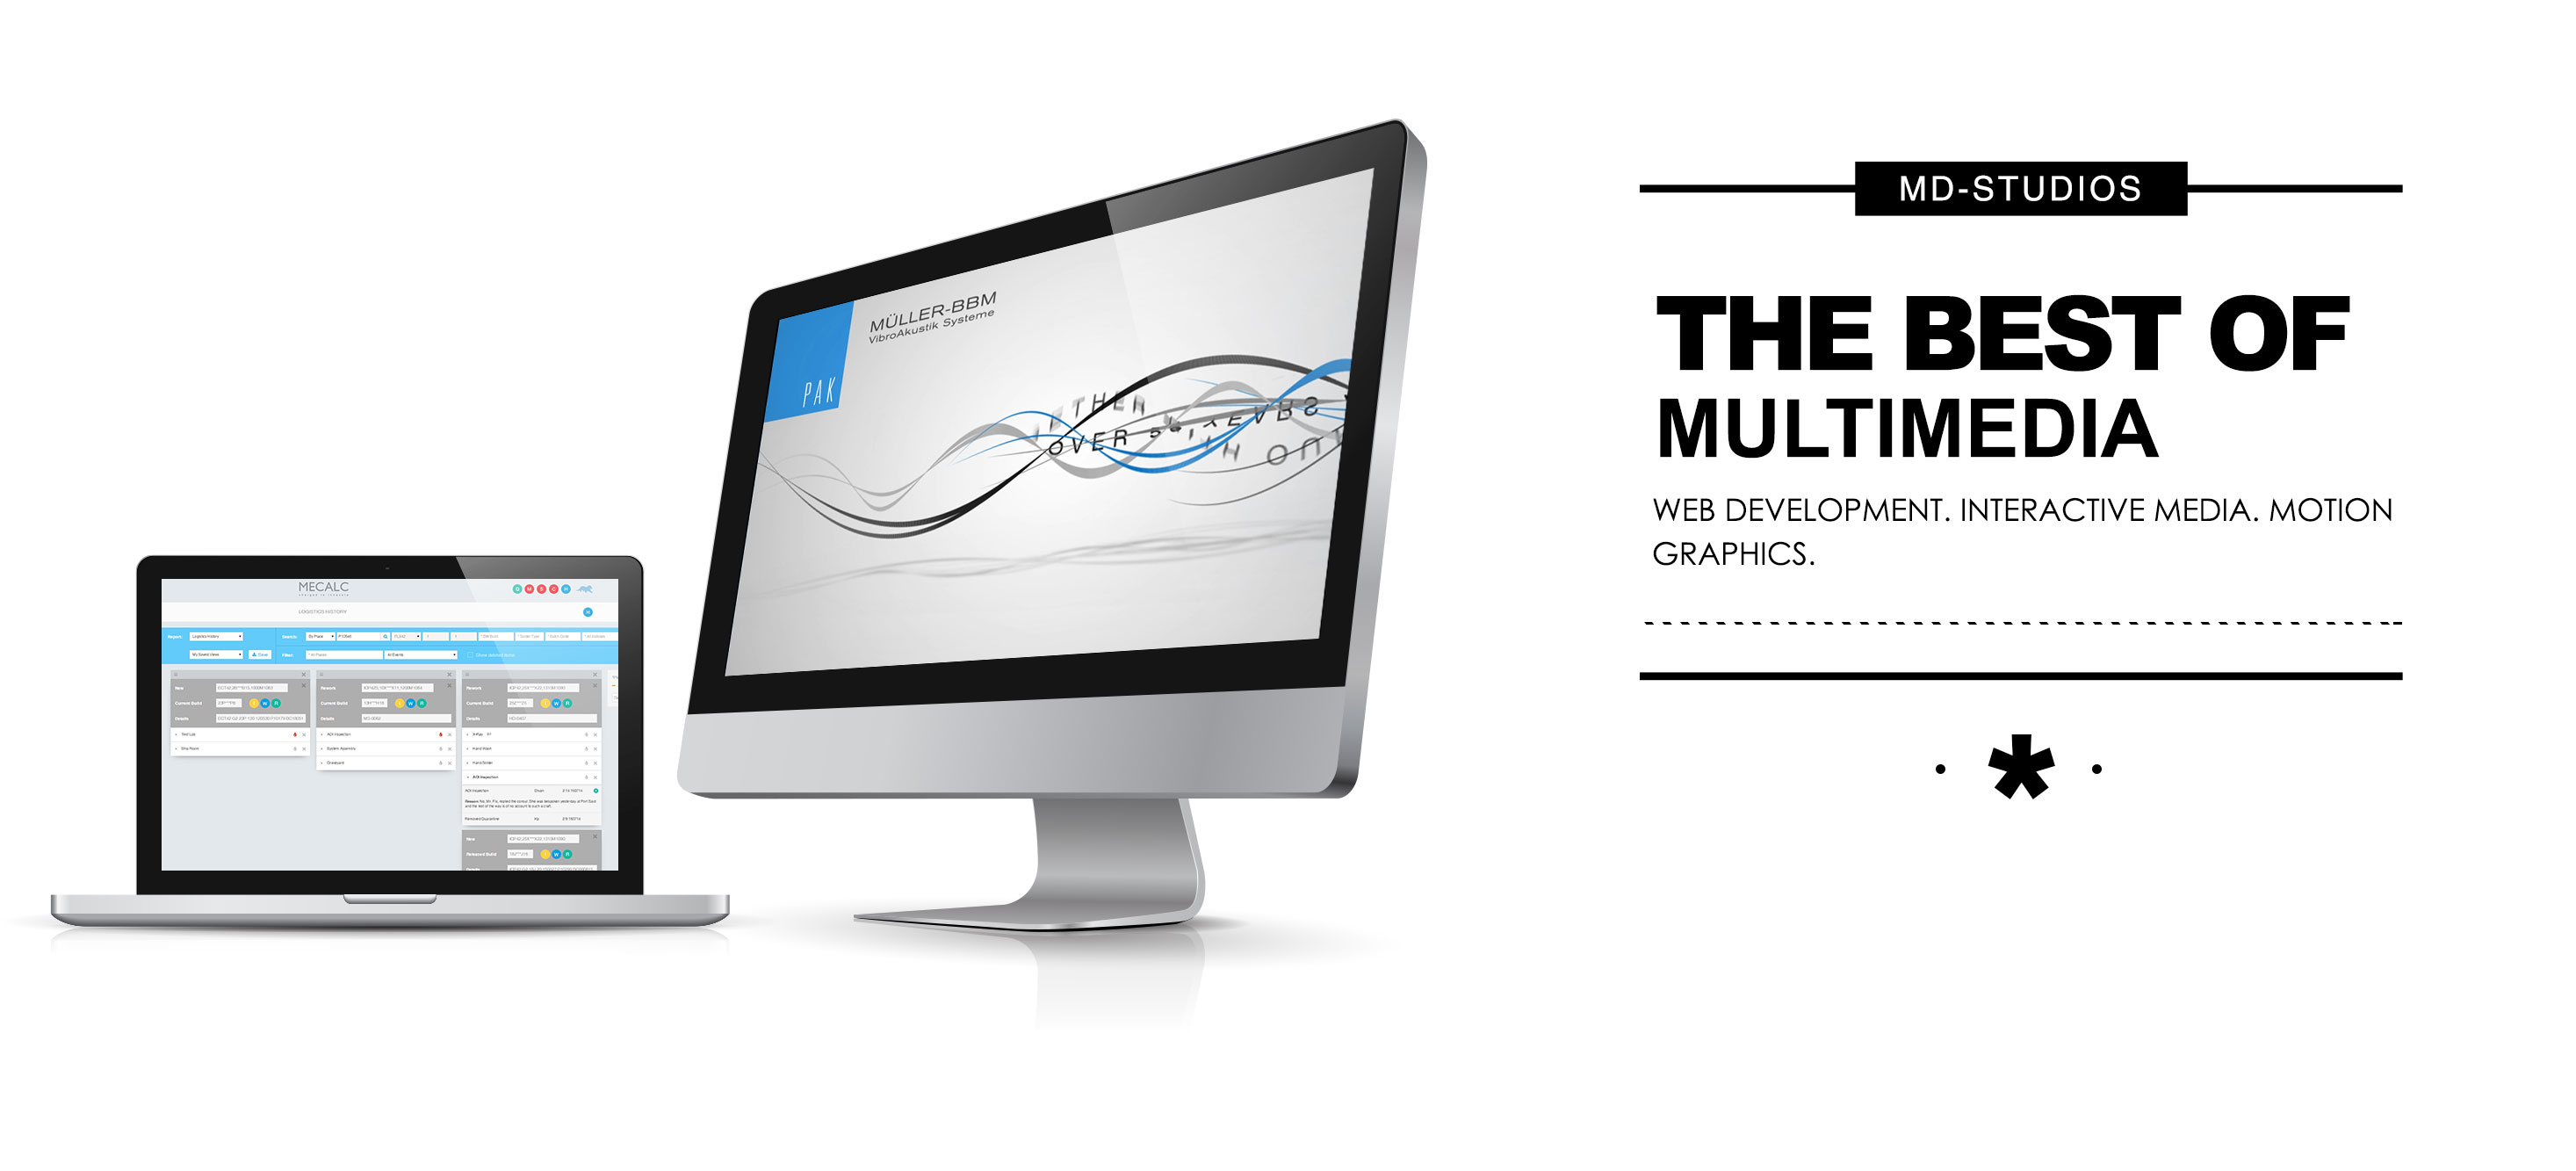 Multimedia - Web Design, Interactive Media, Motion Graphics